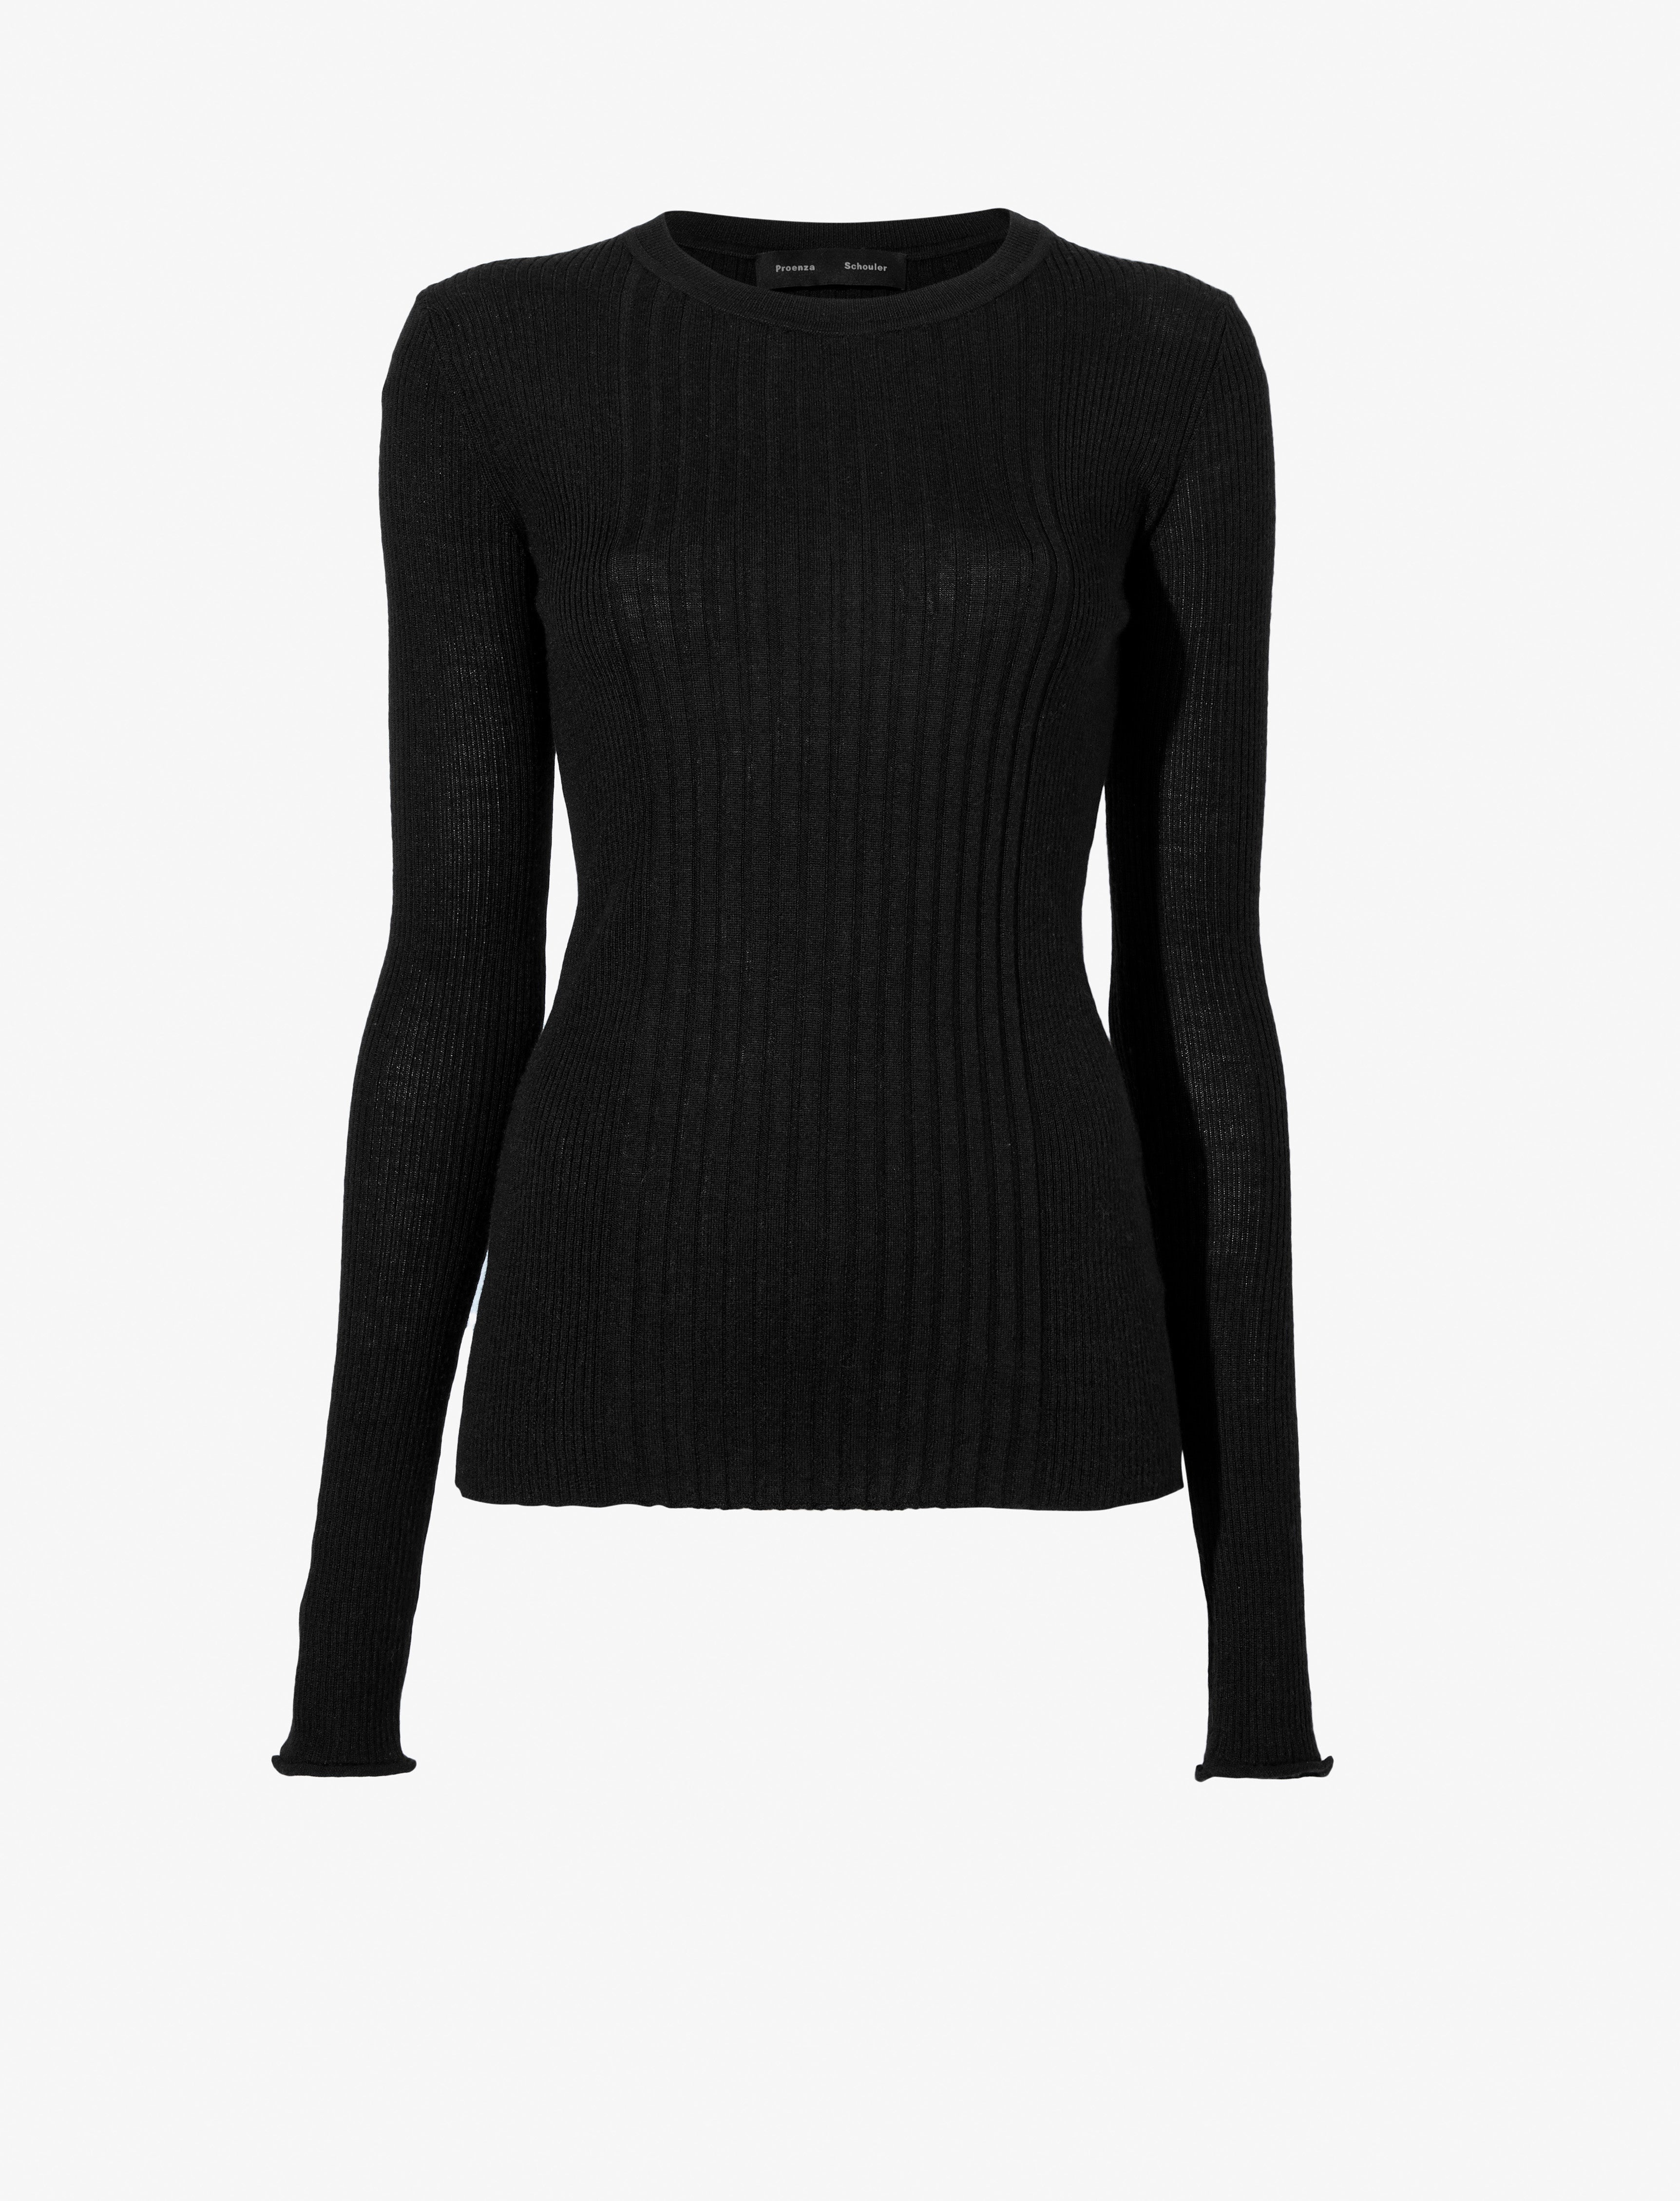 Cassidy Sweater in Superfine Merino Silk - 1